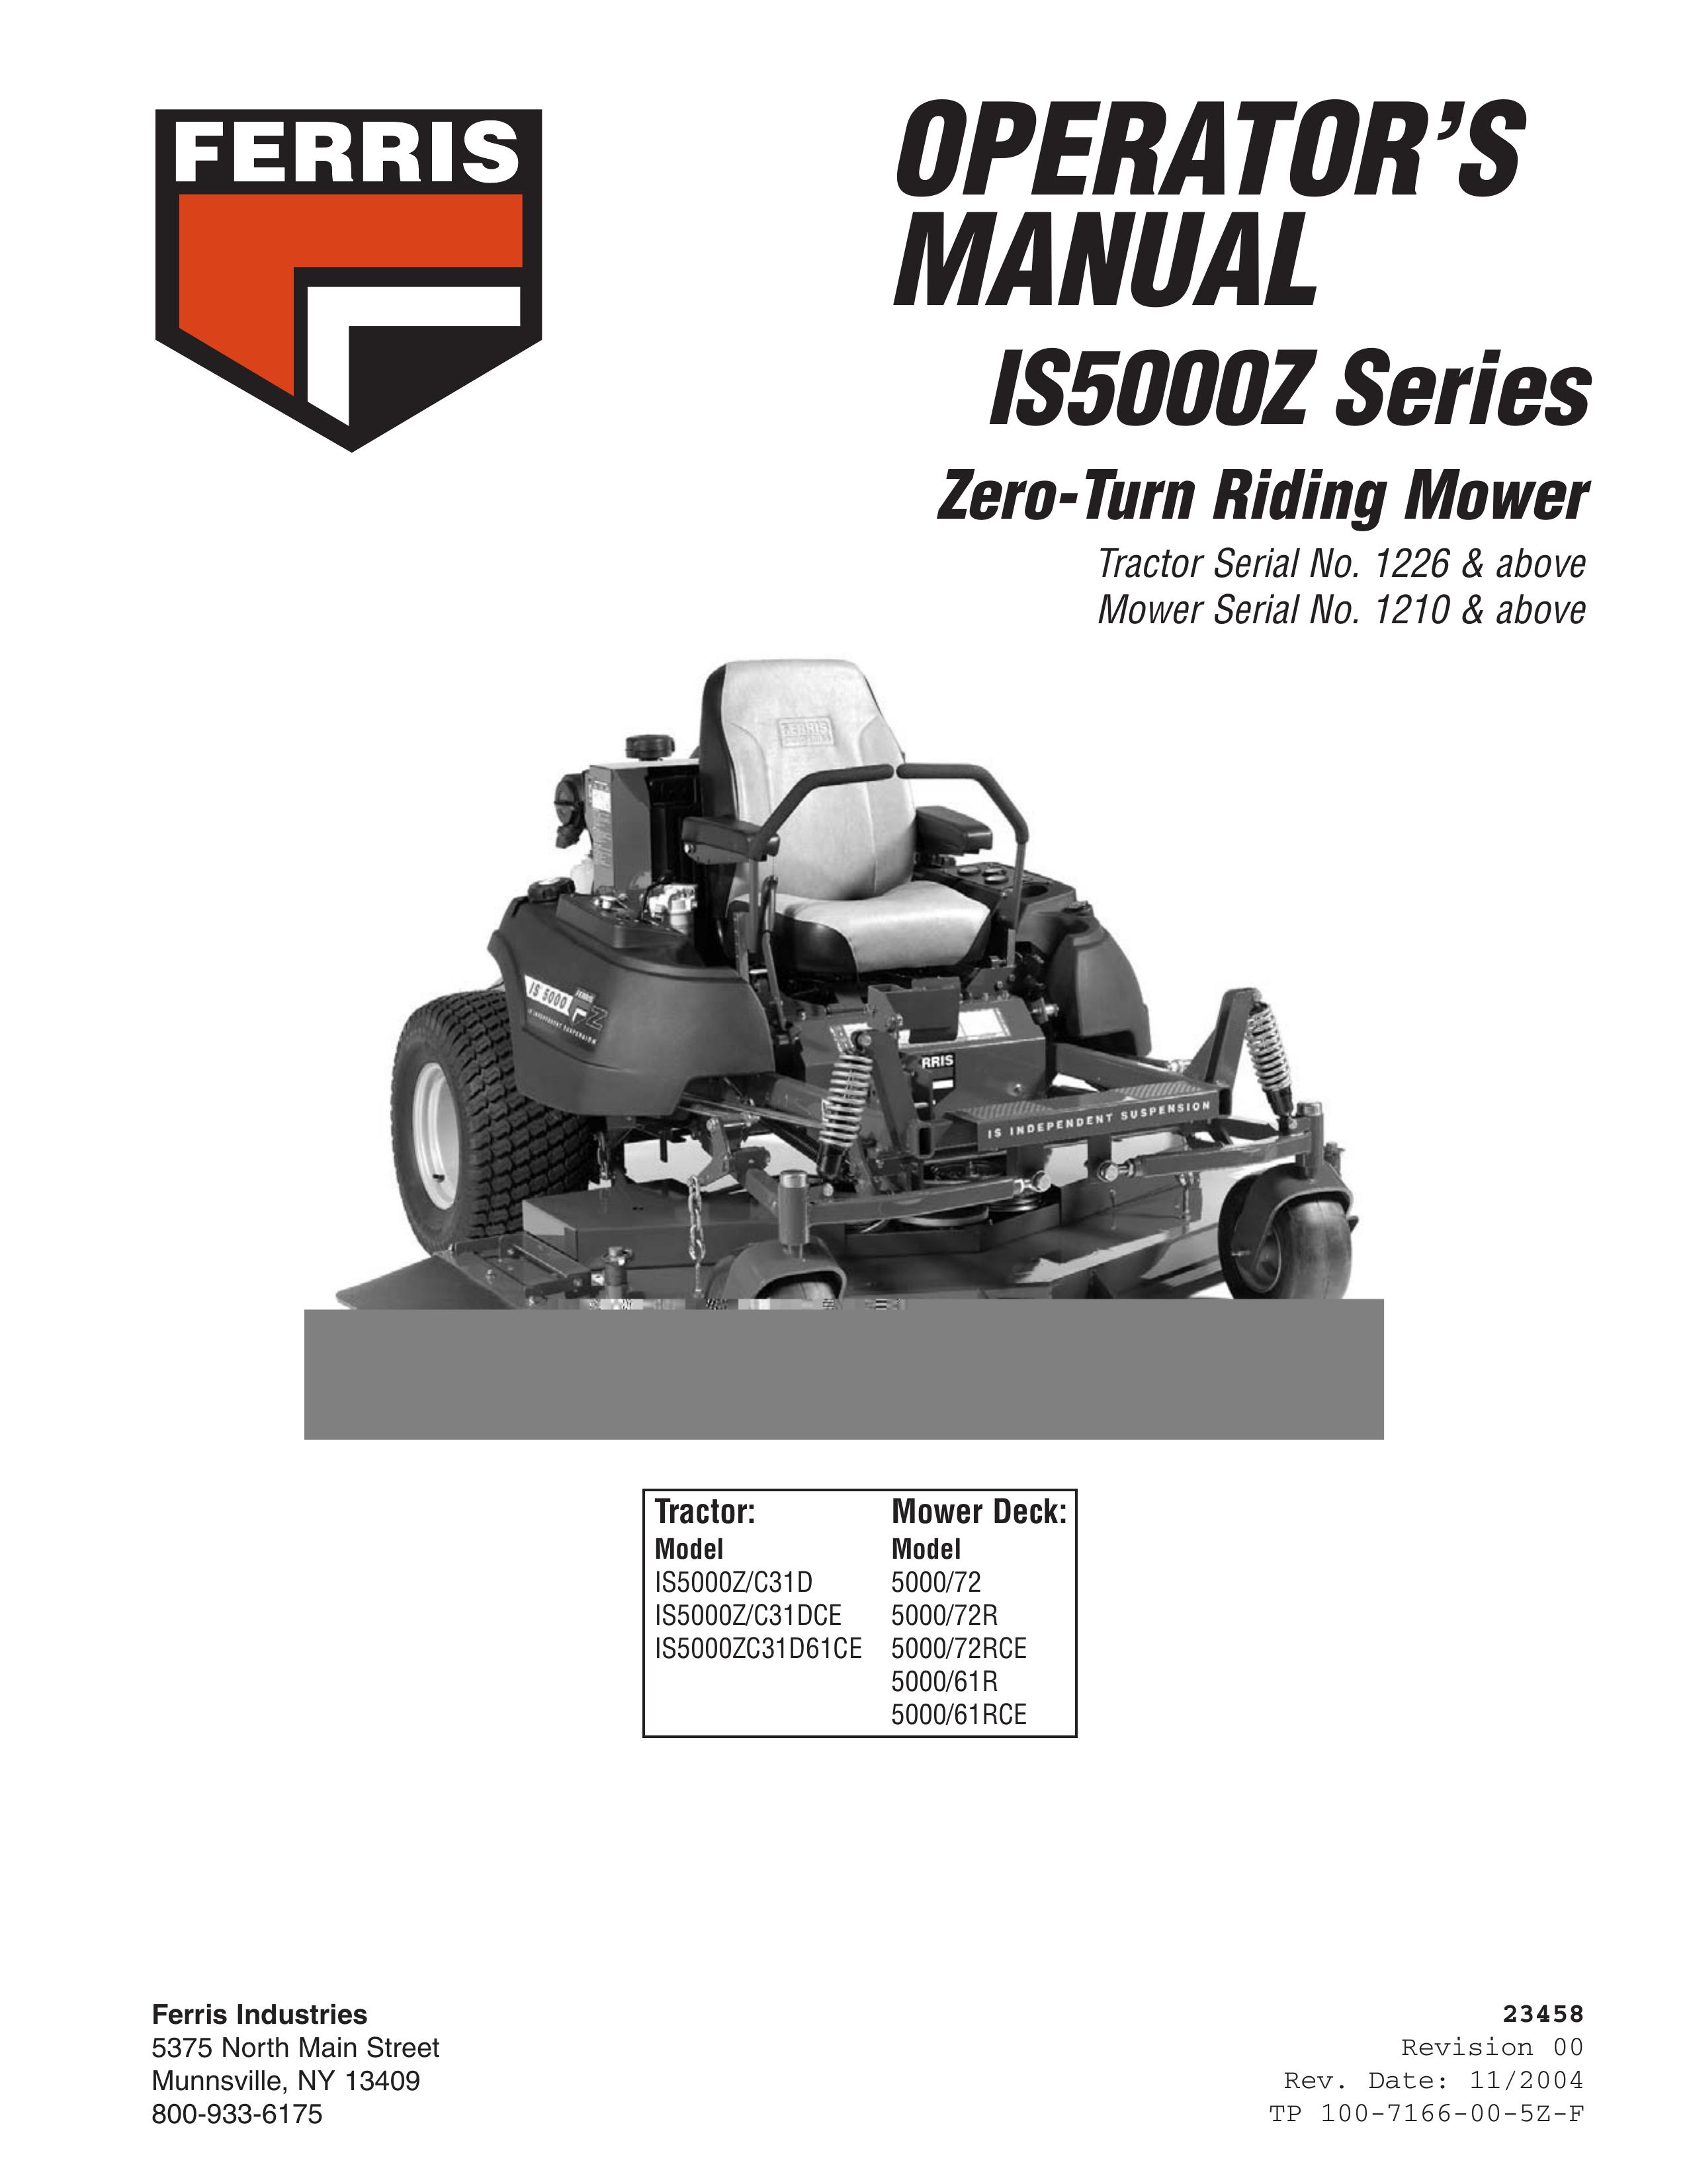 Ferris Industries 5000/61RCE Lawn Mower User Manual